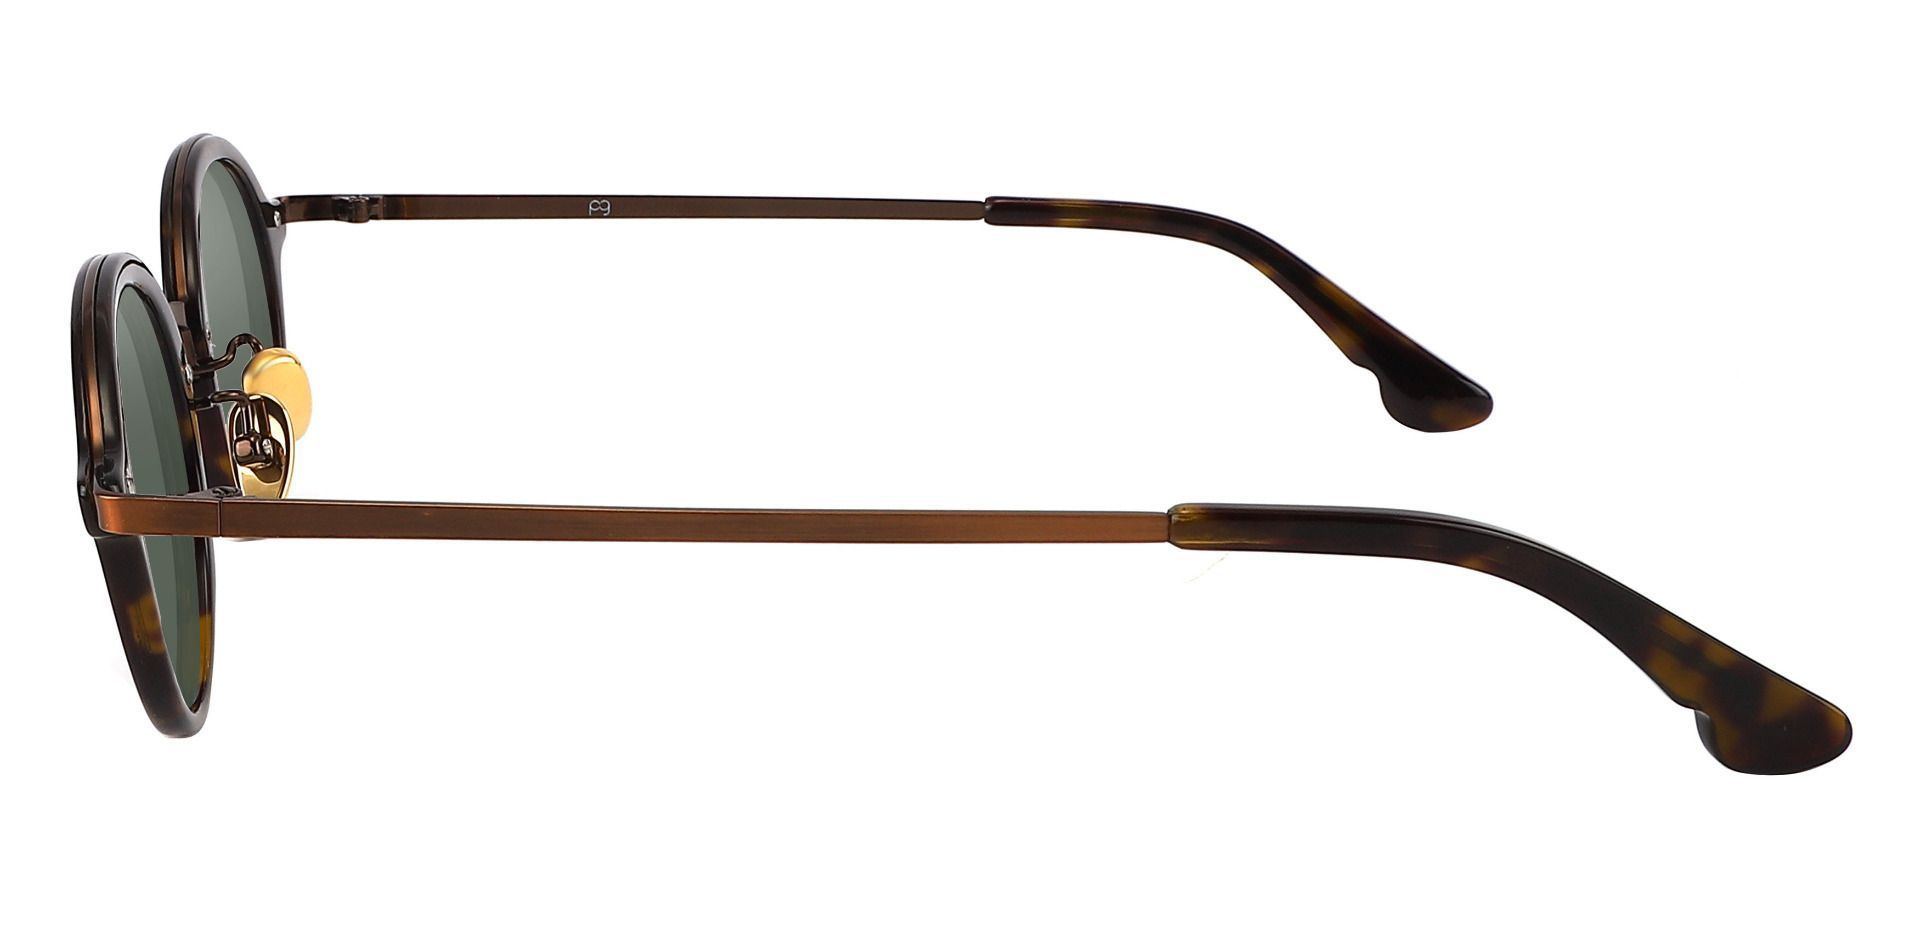 Humphrey Oval Prescription Sunglasses - Tortoise Frame With Green Lenses